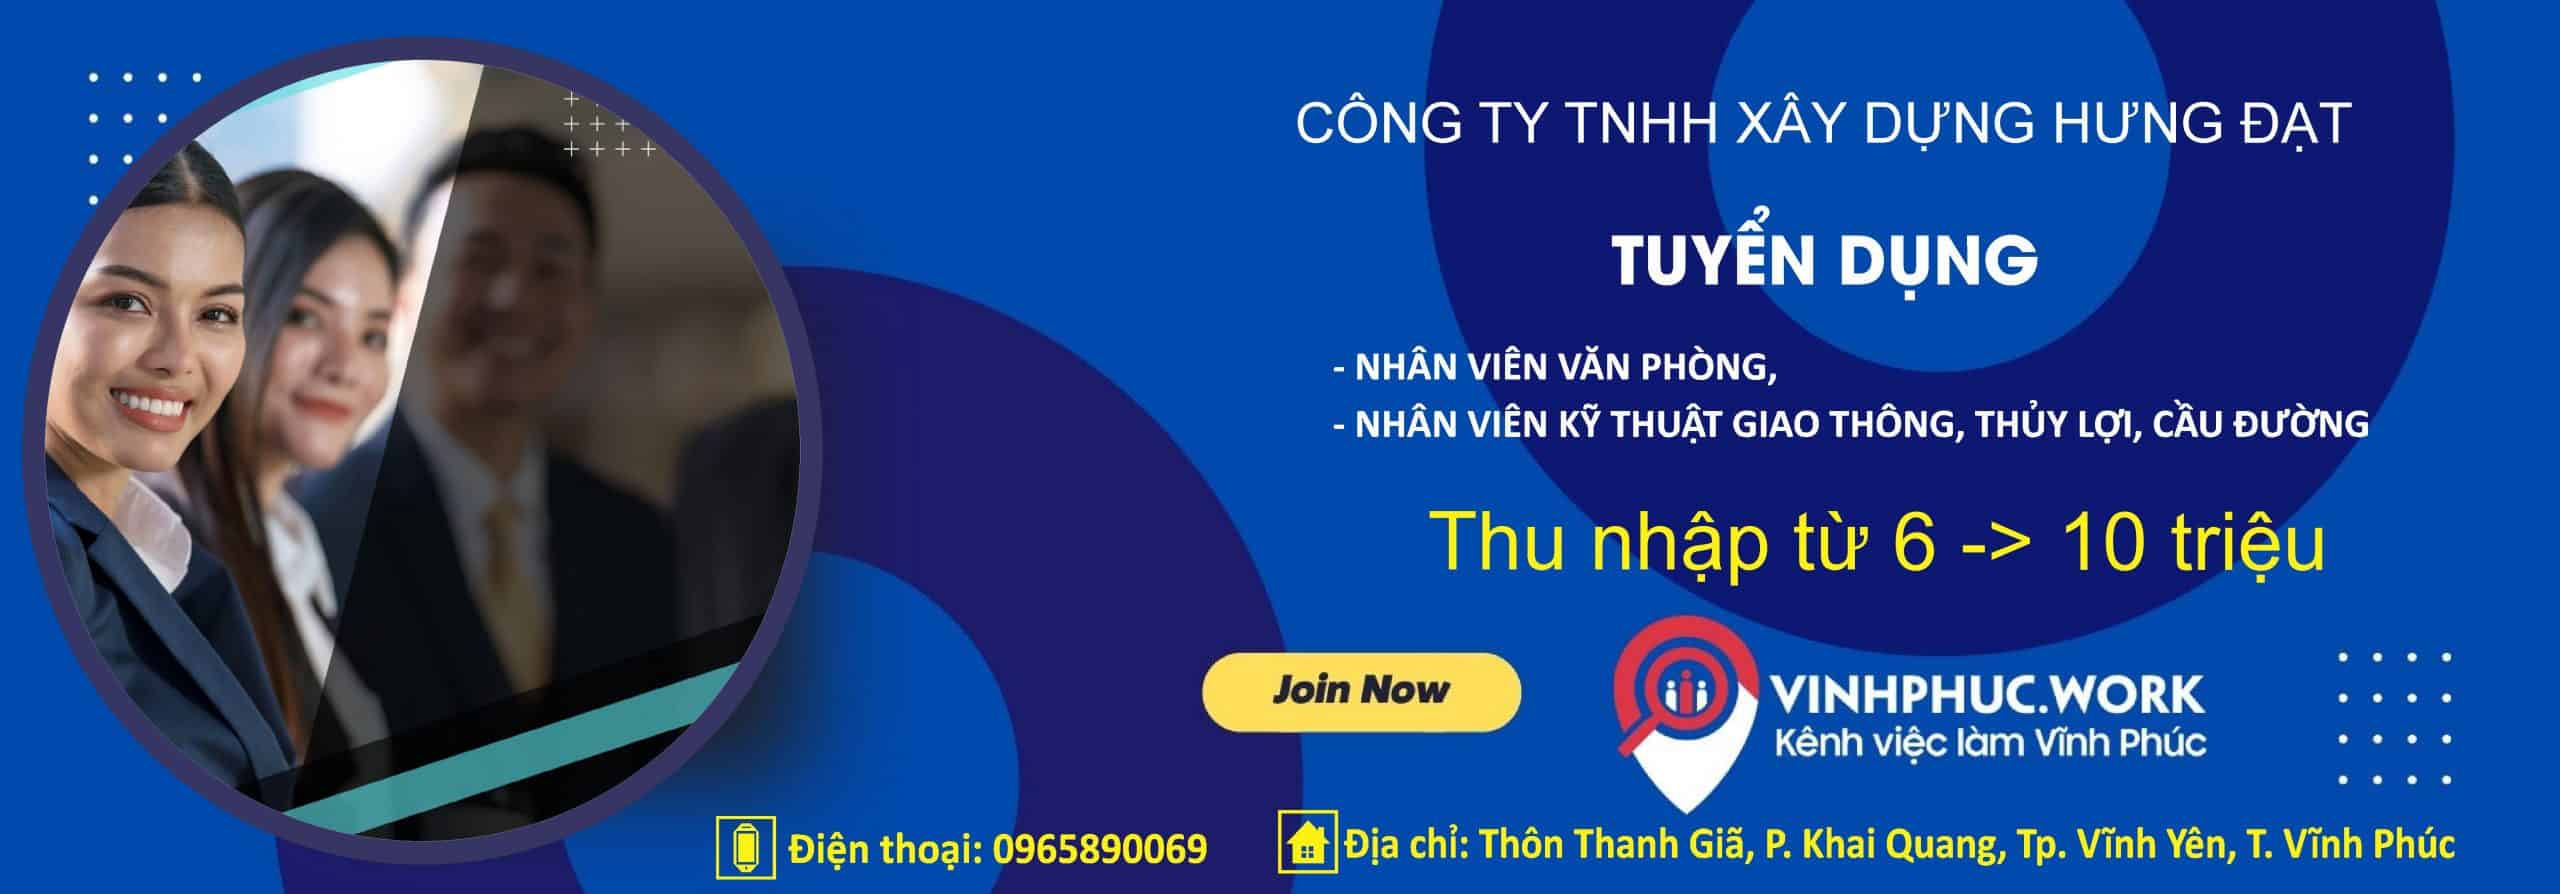 Banner Slider Hung Dat Tuyen Nv Van Phong Ky Thuat